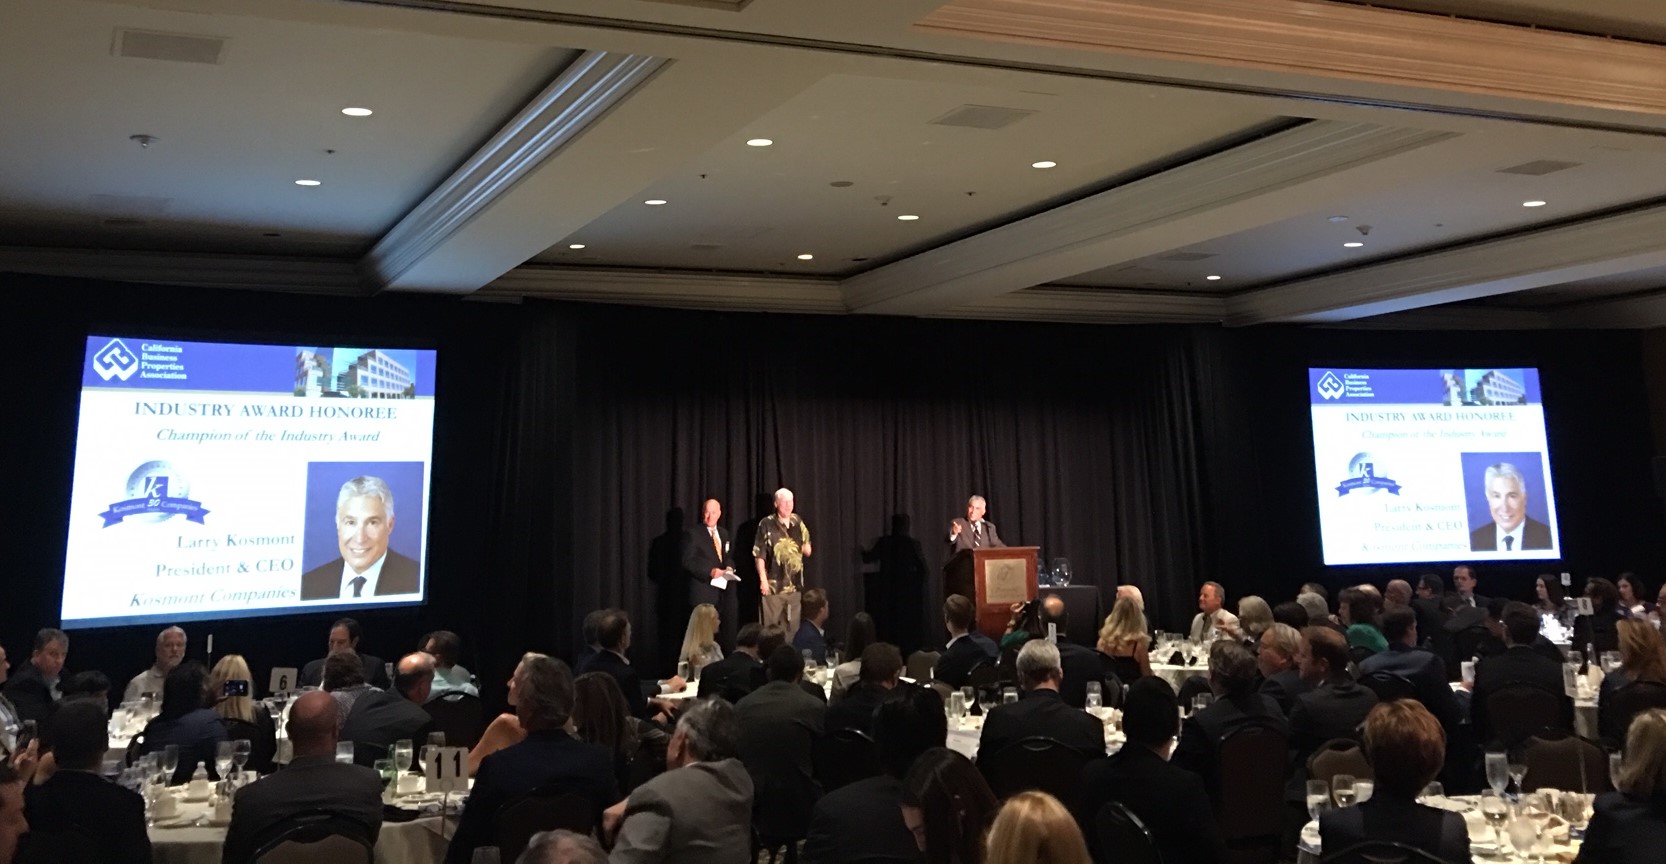 2016 CBPA Industry Awards Dinner - Larry J Kosmont Acceptance Speech